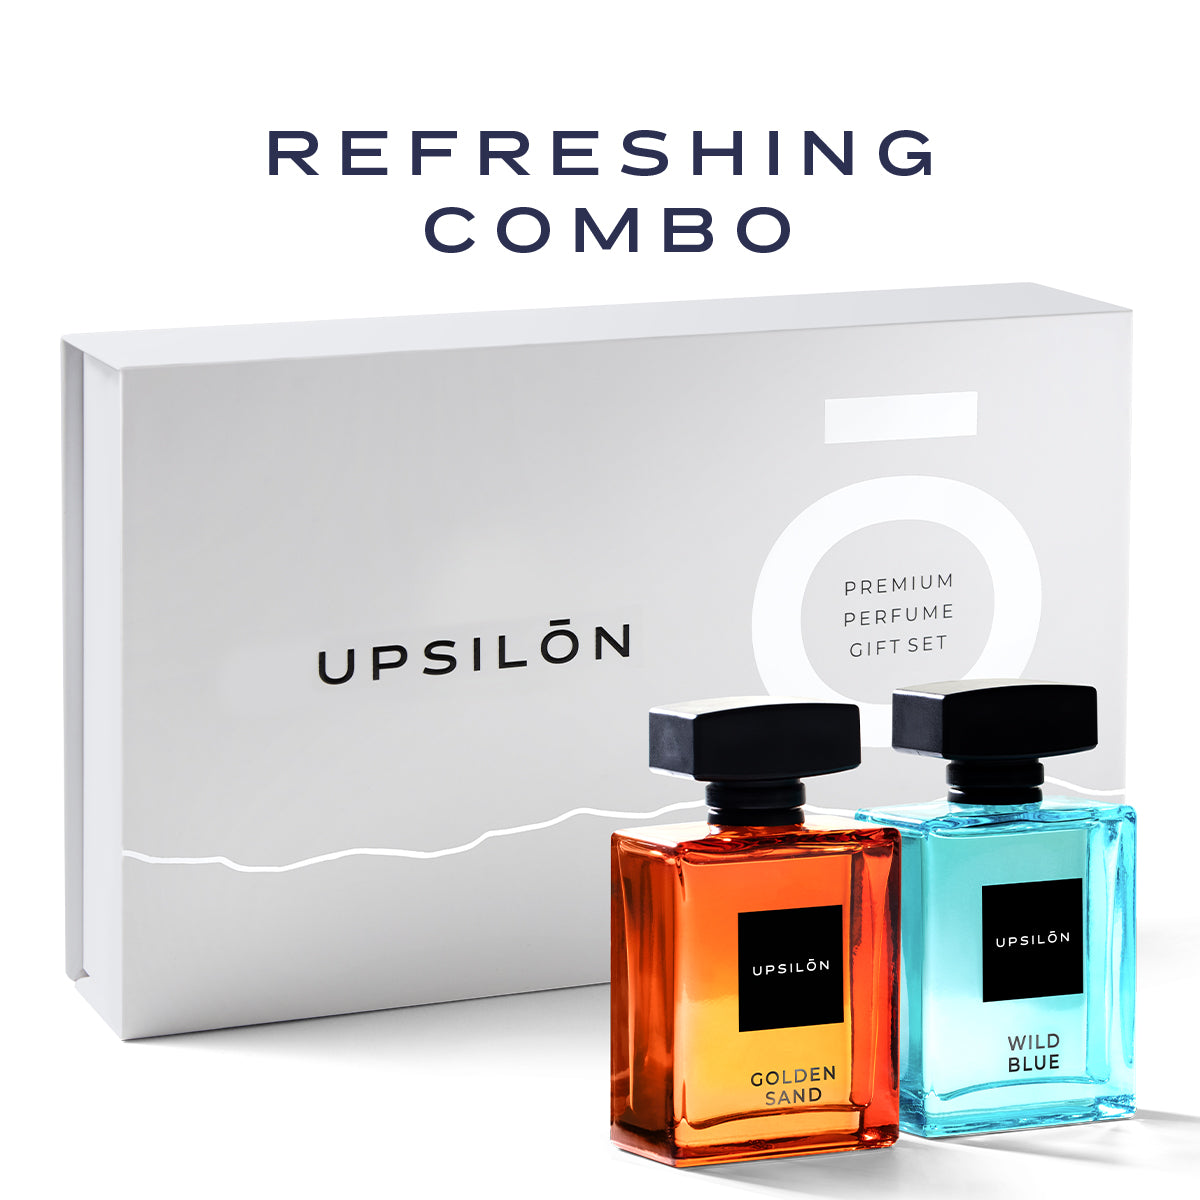 Upsilon Golden Sand and Wild Blue Eau de Parfum, two long-lasting and powerful fragrances in a travel-friendly gift set.